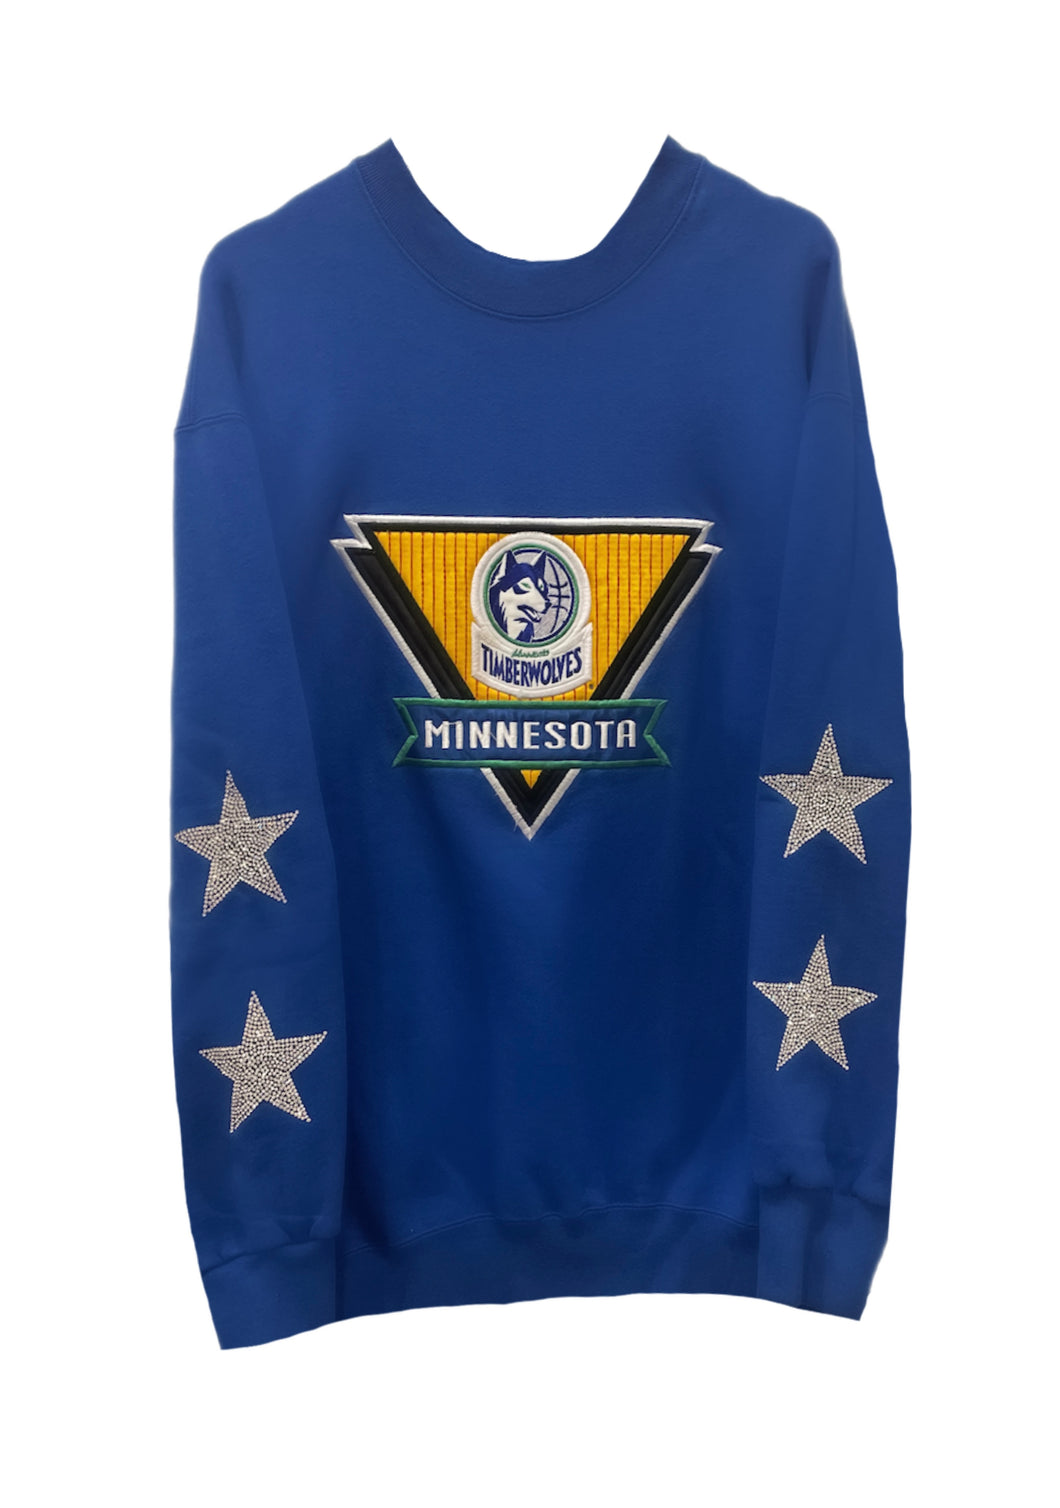 Minnesota Timberwolves, NBA One of a KIND Vintage Sweatshirt with Crystal Star Design.